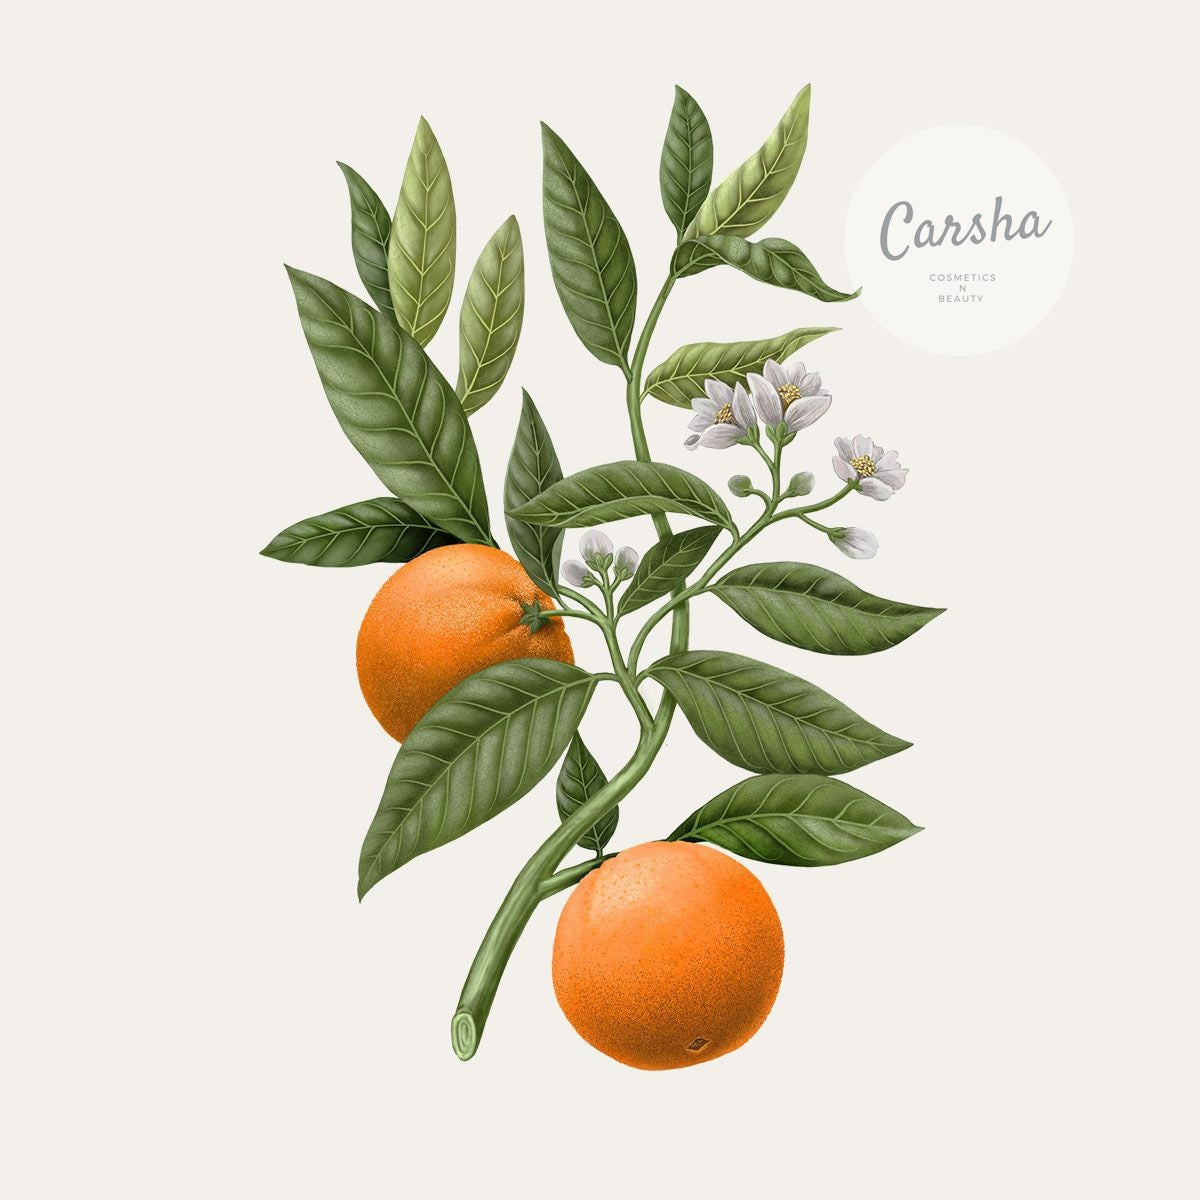 Carriere Freres Orange Blossom Botanical Palet | Carsha